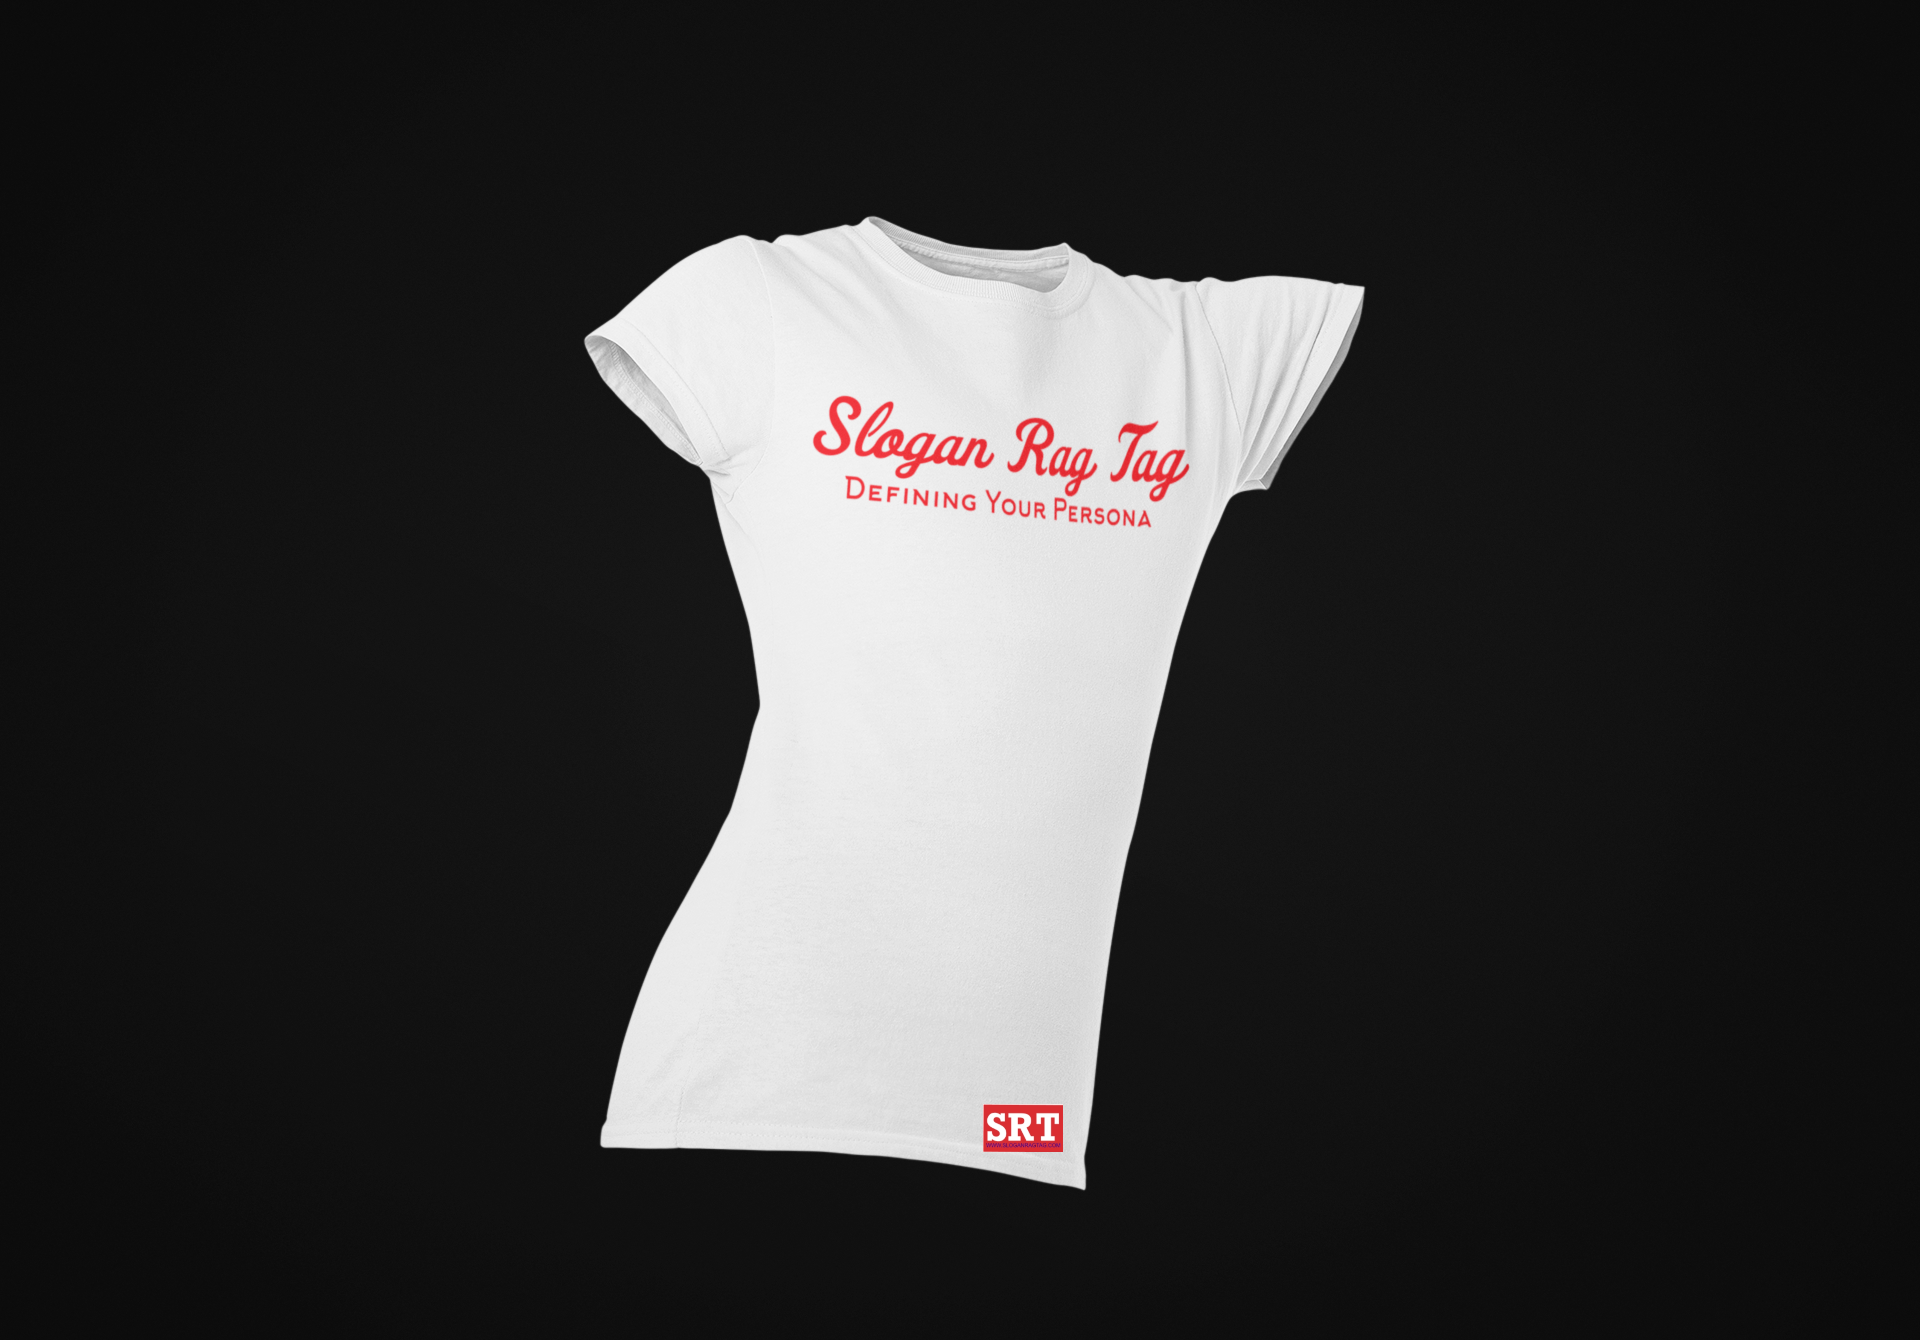 Slogan Rag Tag (defining your persona) WOMEN T-shirt